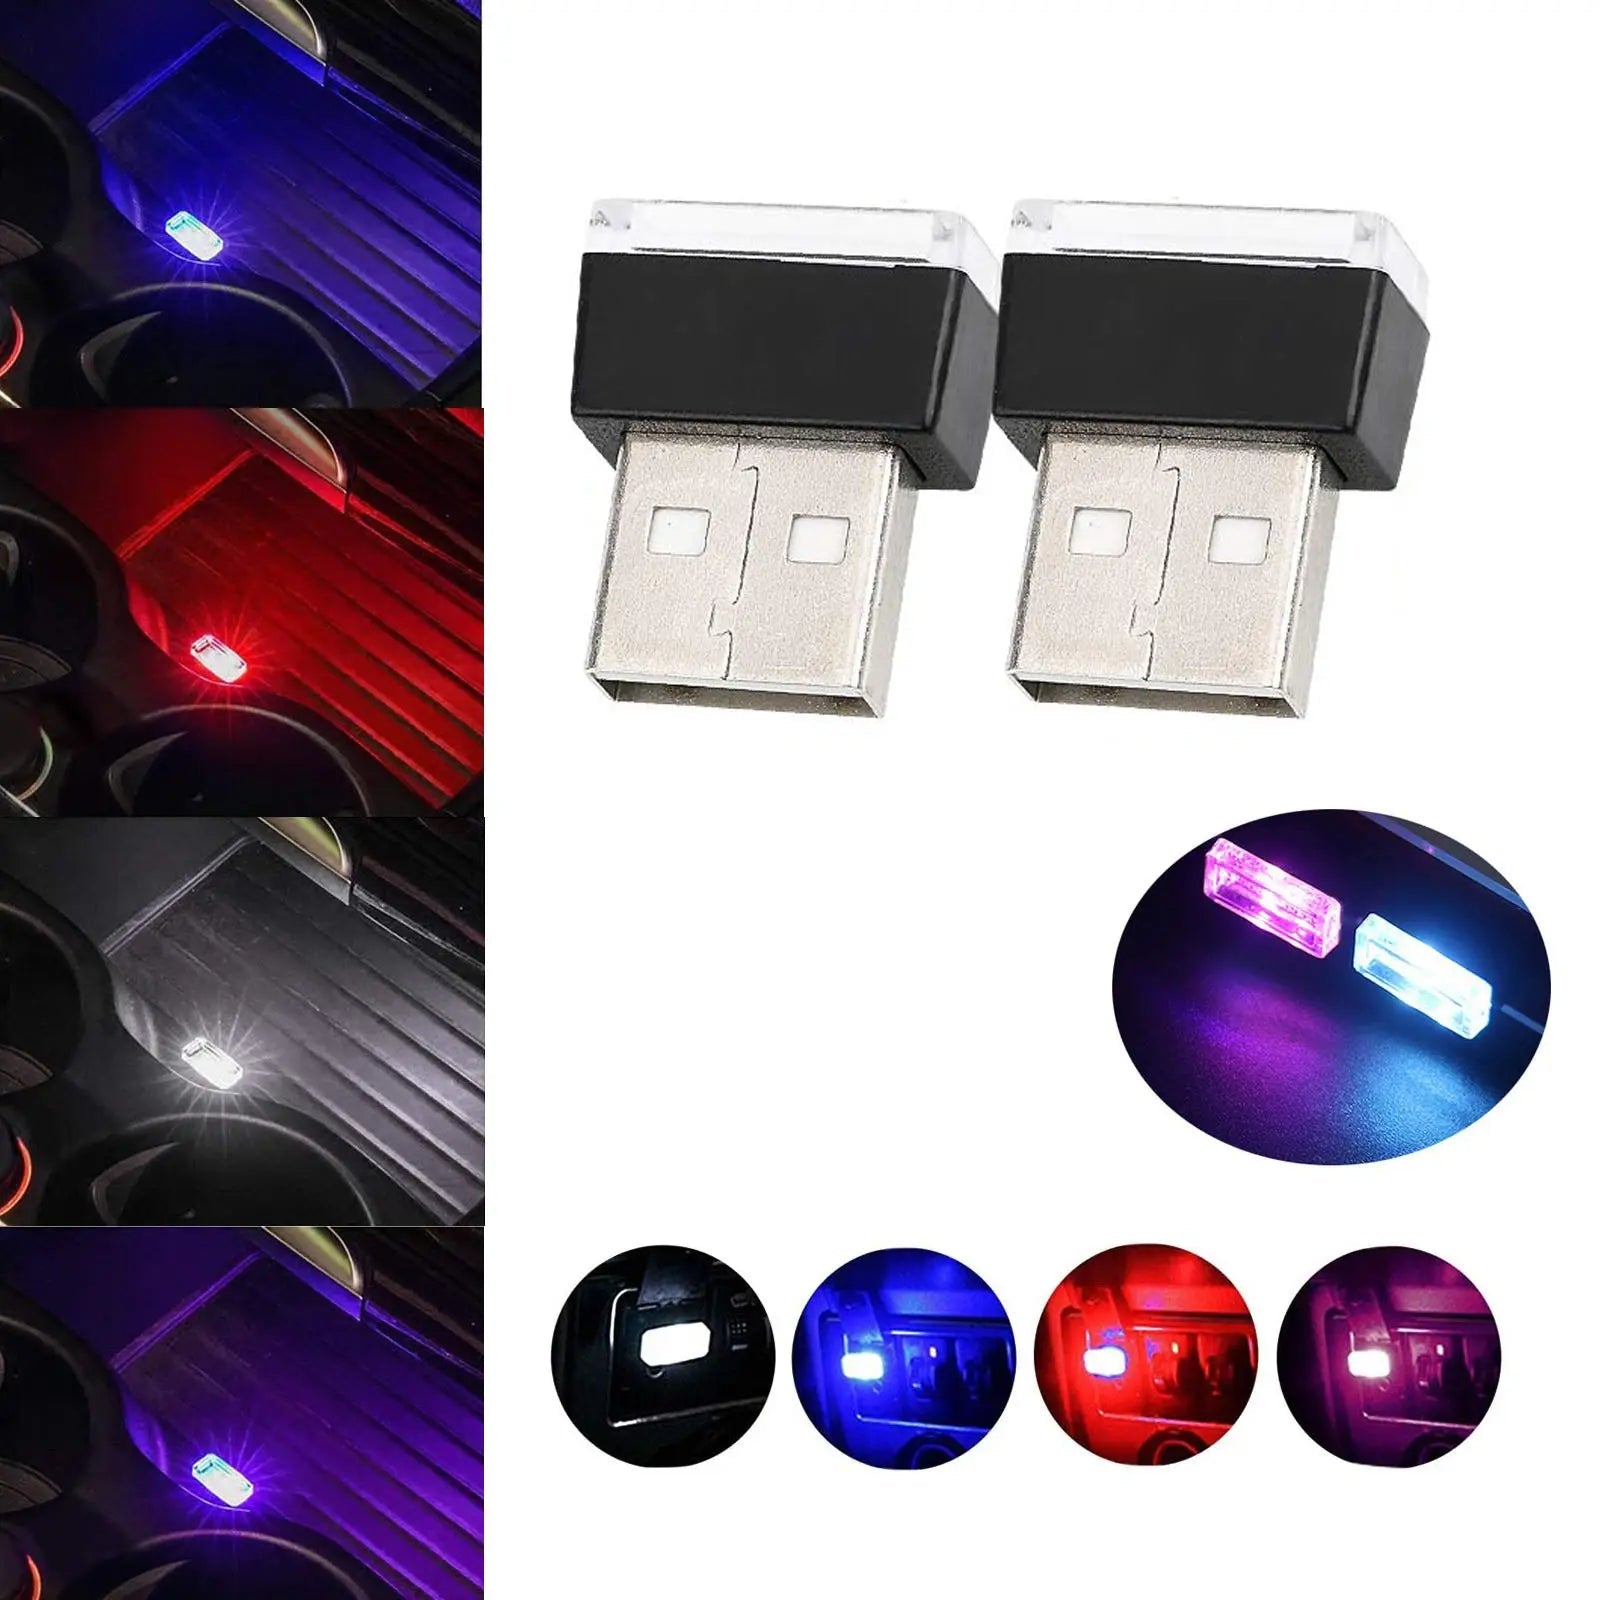 USB-Mini-LED-Atmosphärenlicht für Autoinnenräume RSHOP 